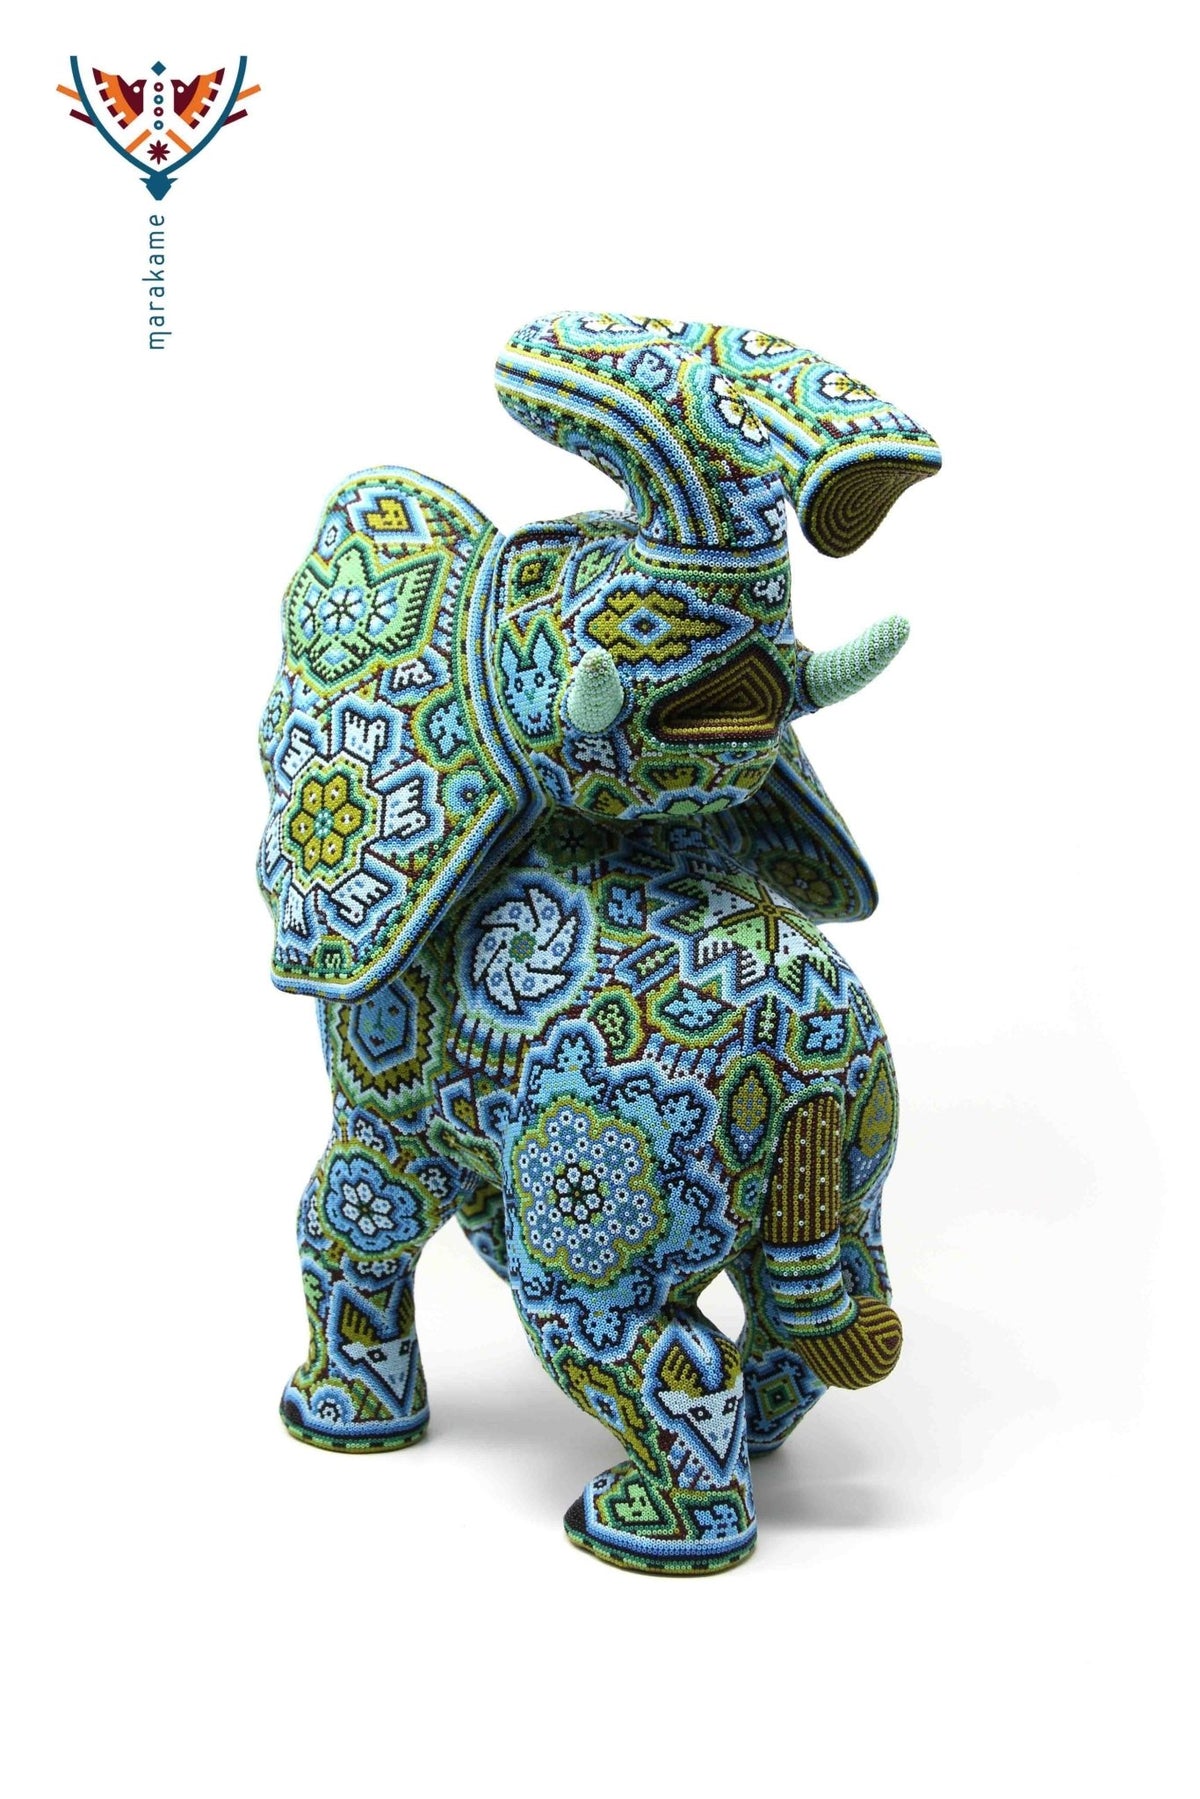 Escultura huichol - Wa x+rikiya - Arte Huichol - Marakame